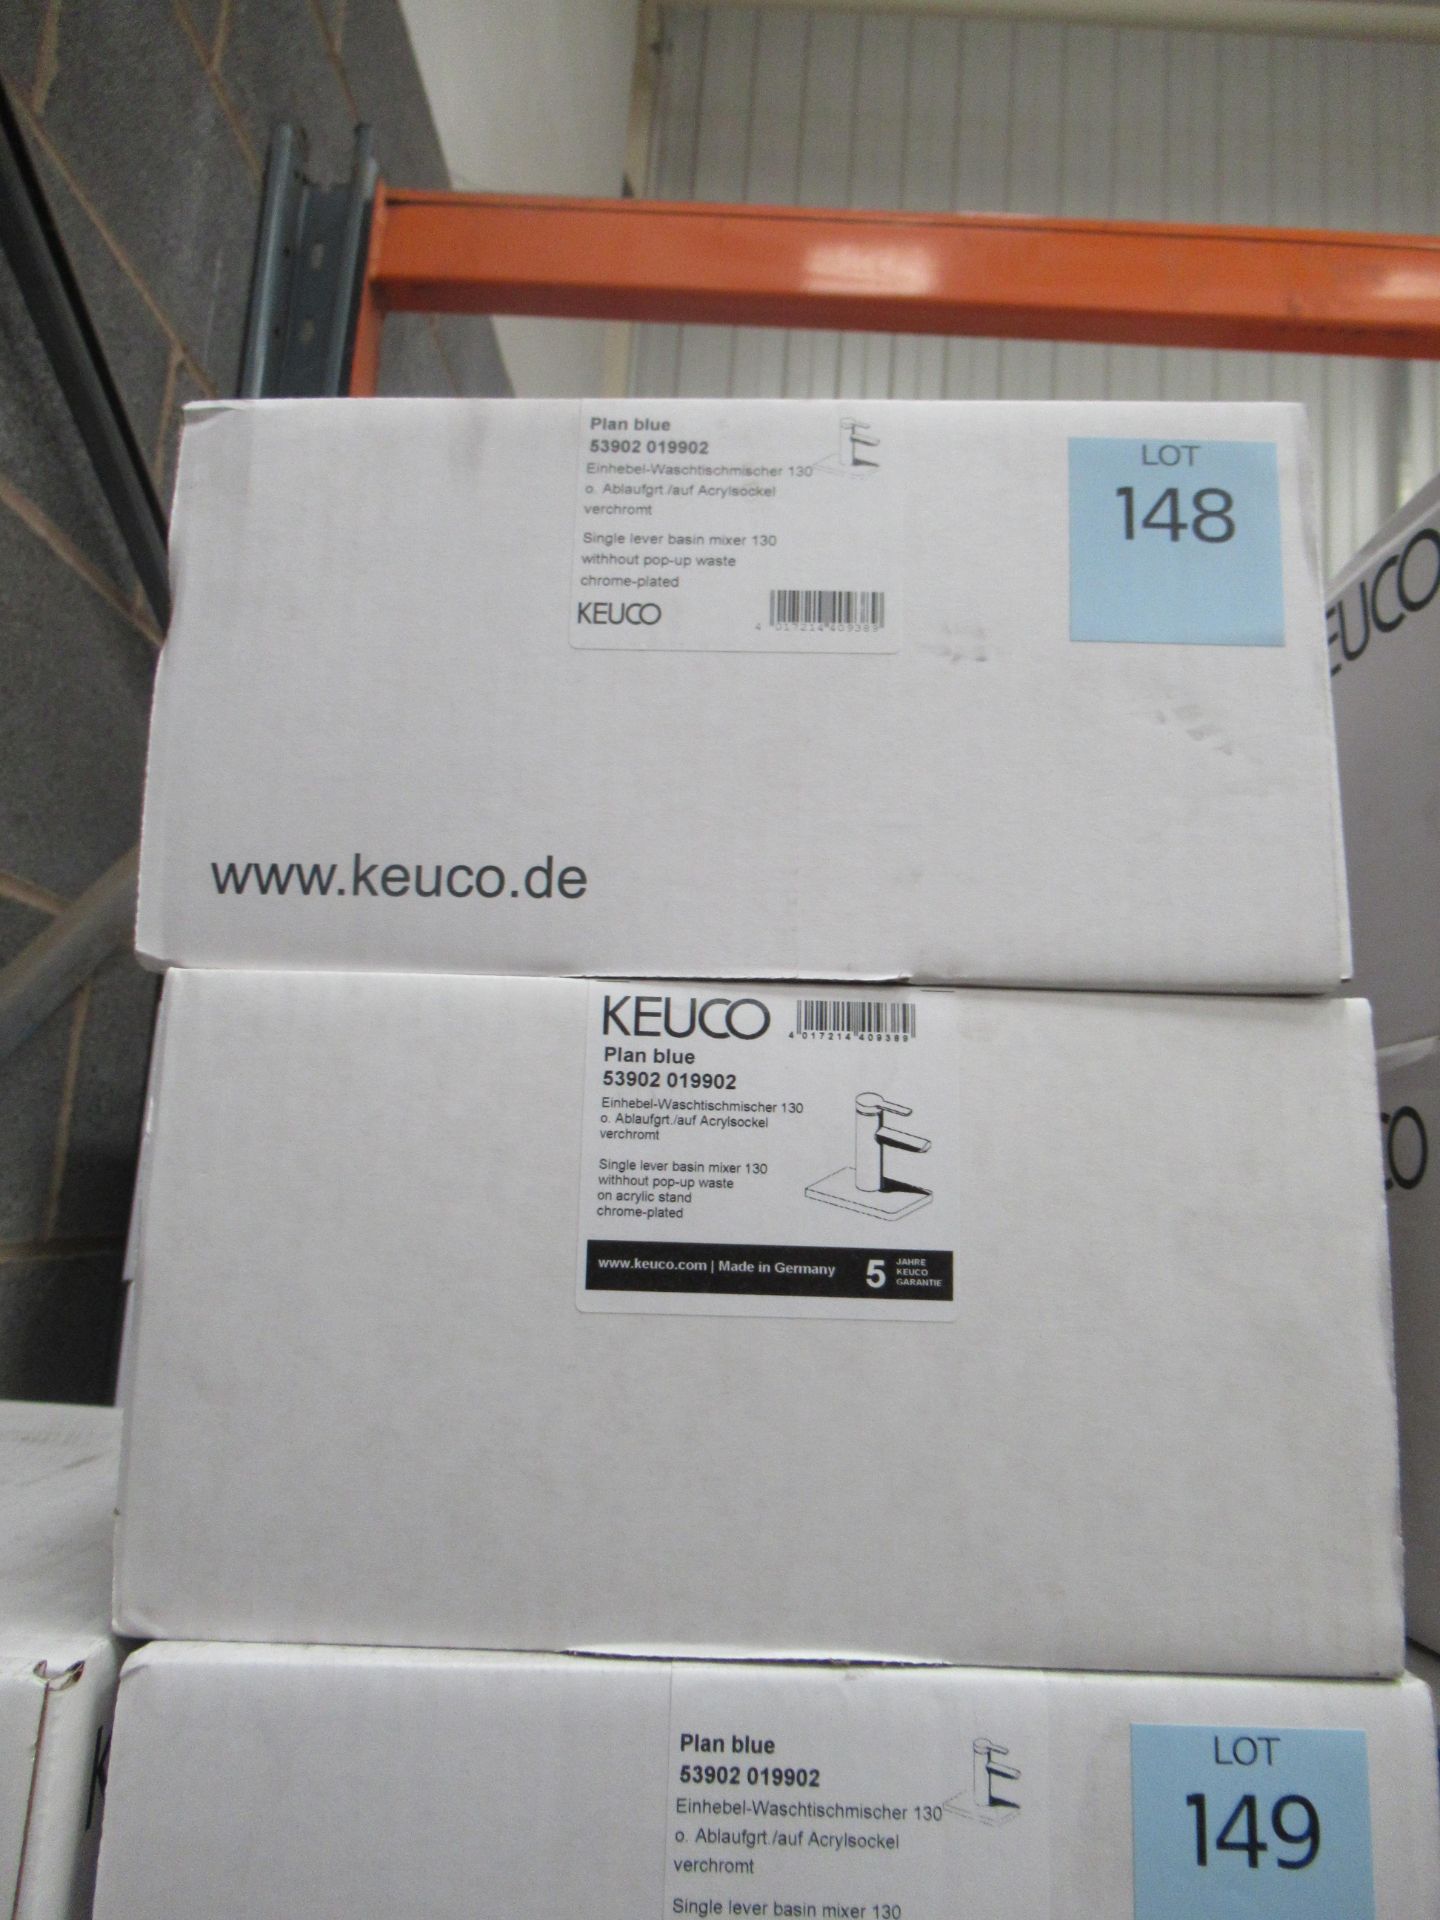 2 x Keuco Plan Blue - Single Lever Basin Mixer 130-Tap, Chrome Plated, P/N 53902-019902